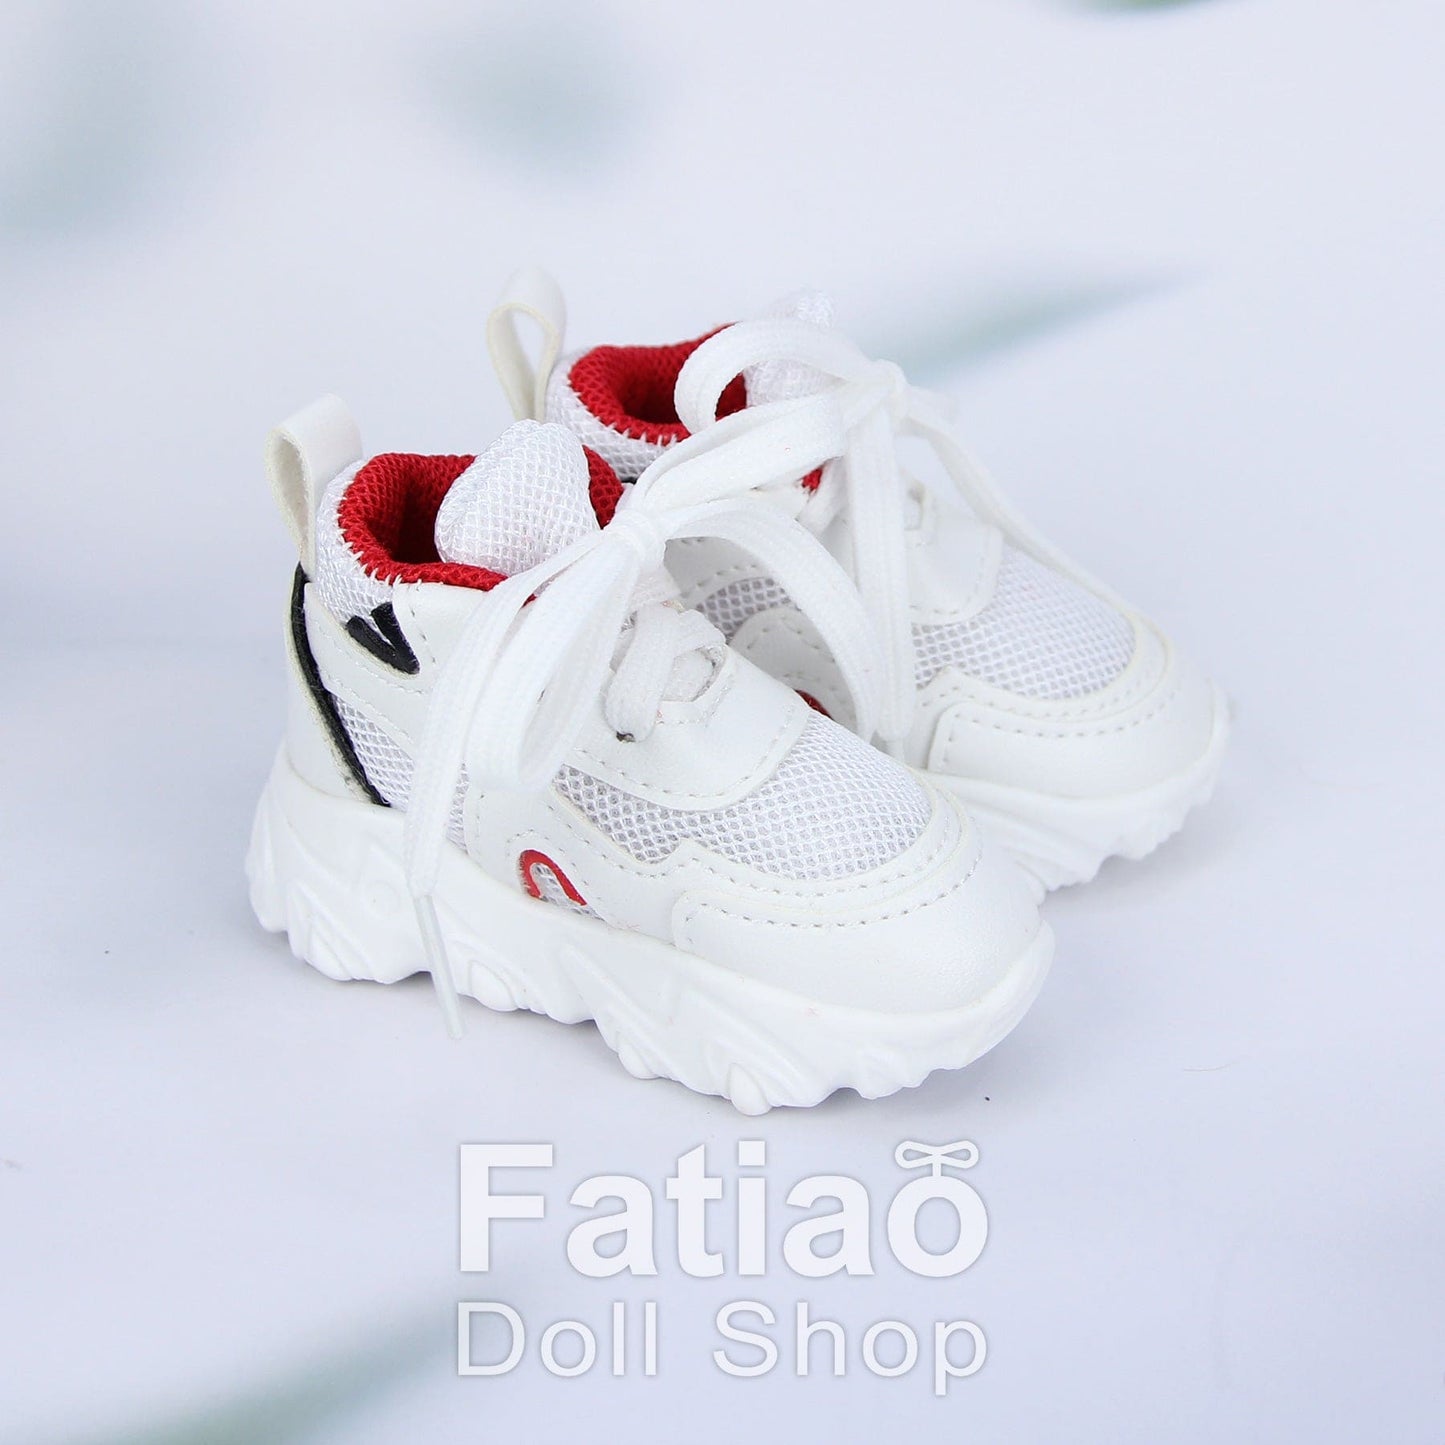 【Fatiao Doll Shop】運動鞋01 多色 / BJD 3分 SD DD Dollfie Dream